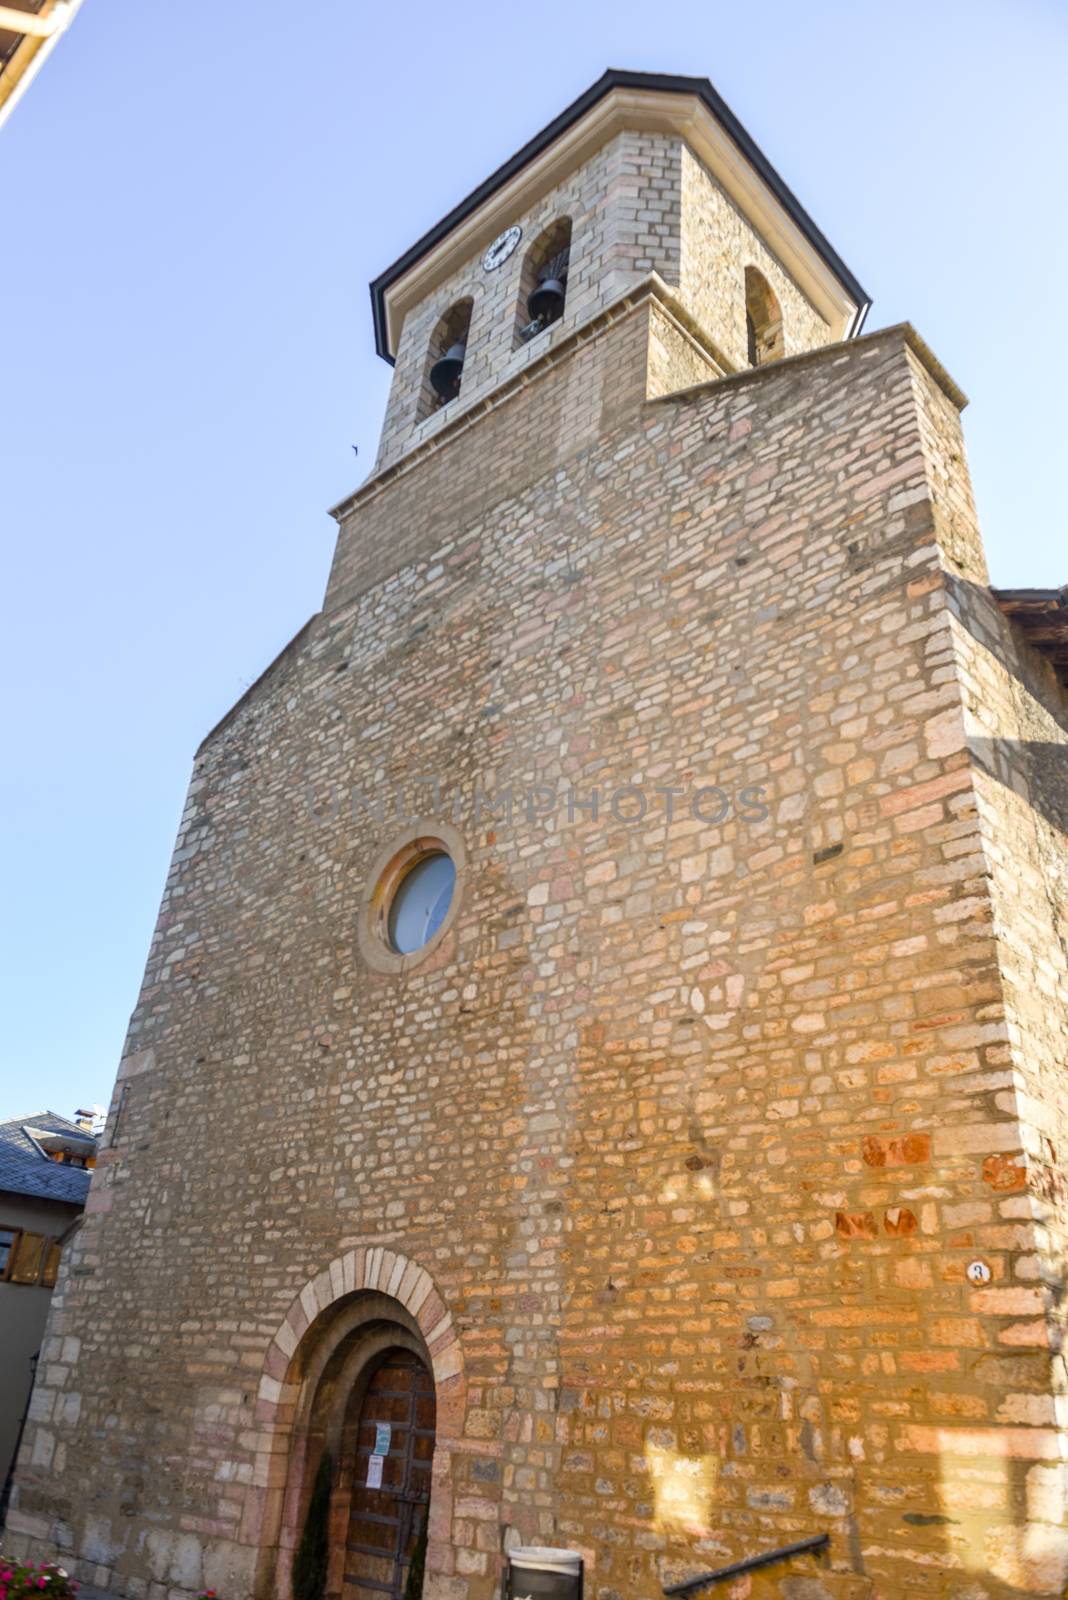  Church of Parròquia de Sant Pere in Summer. Alp, Spain  on Jul by martinscphoto